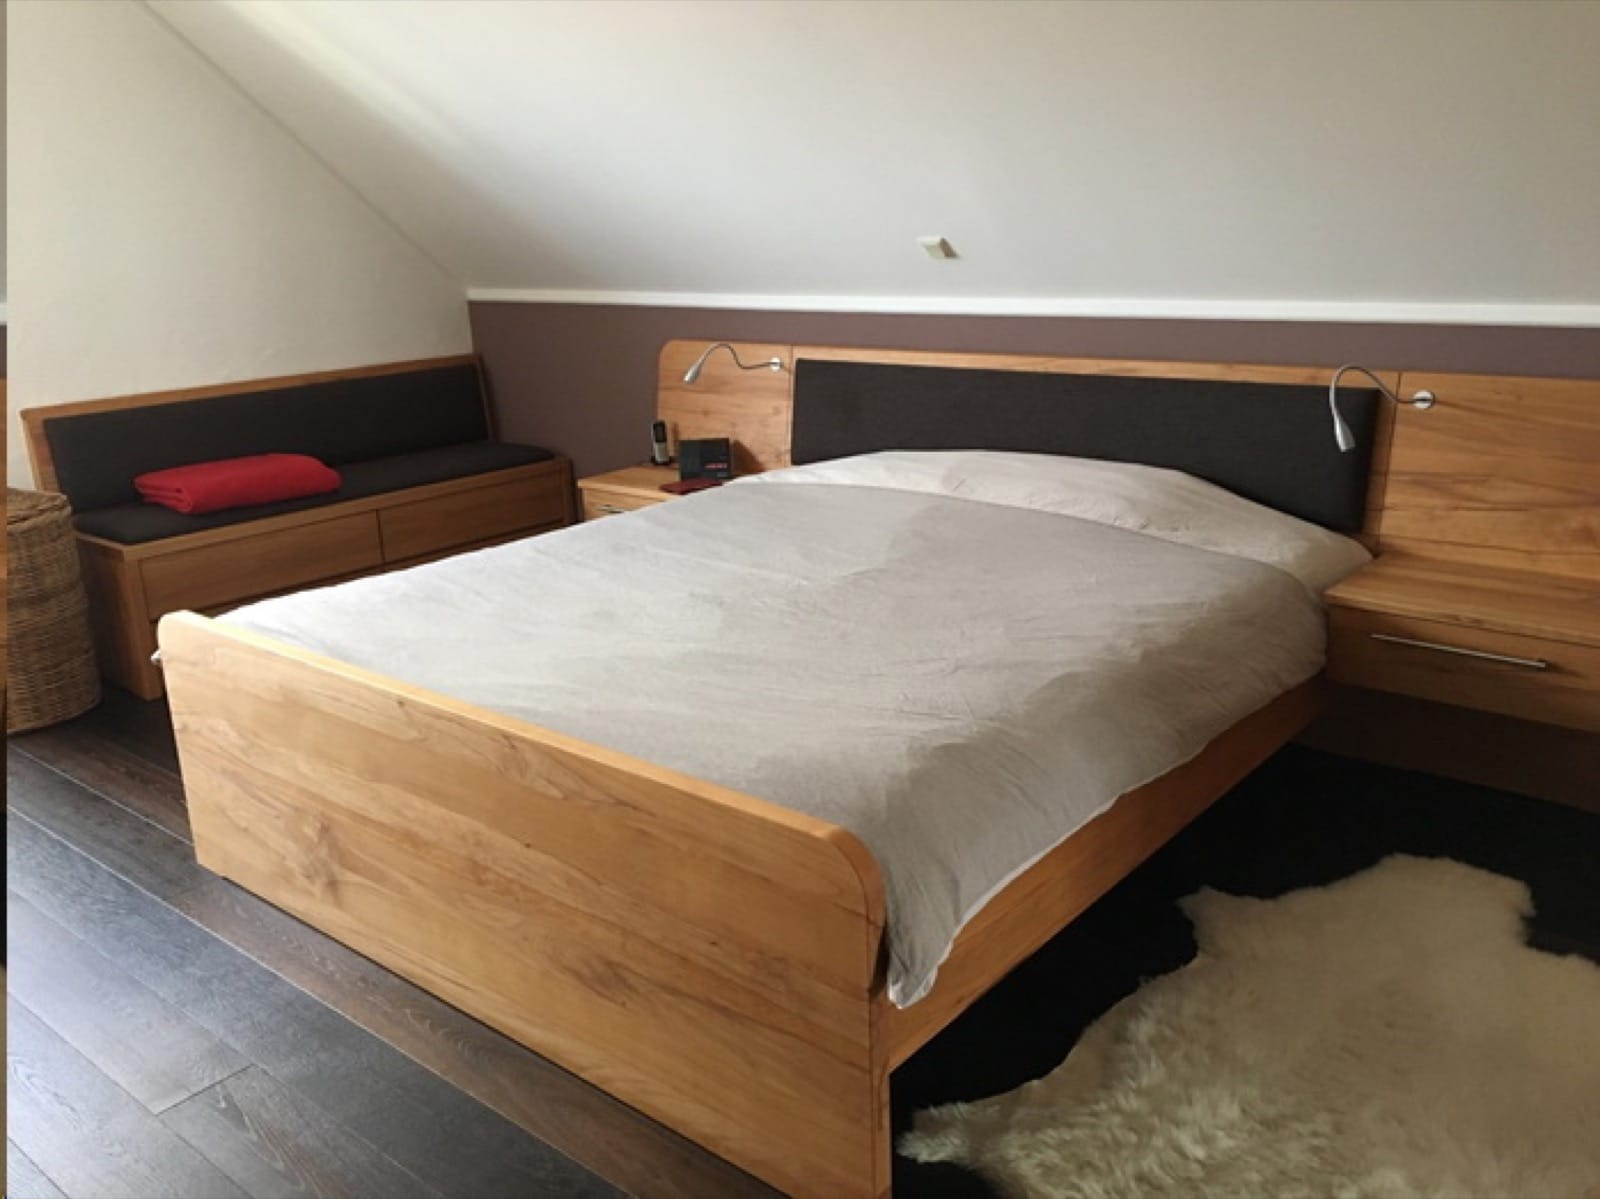 Massivholz-Bett in Kernbuche mit Bank